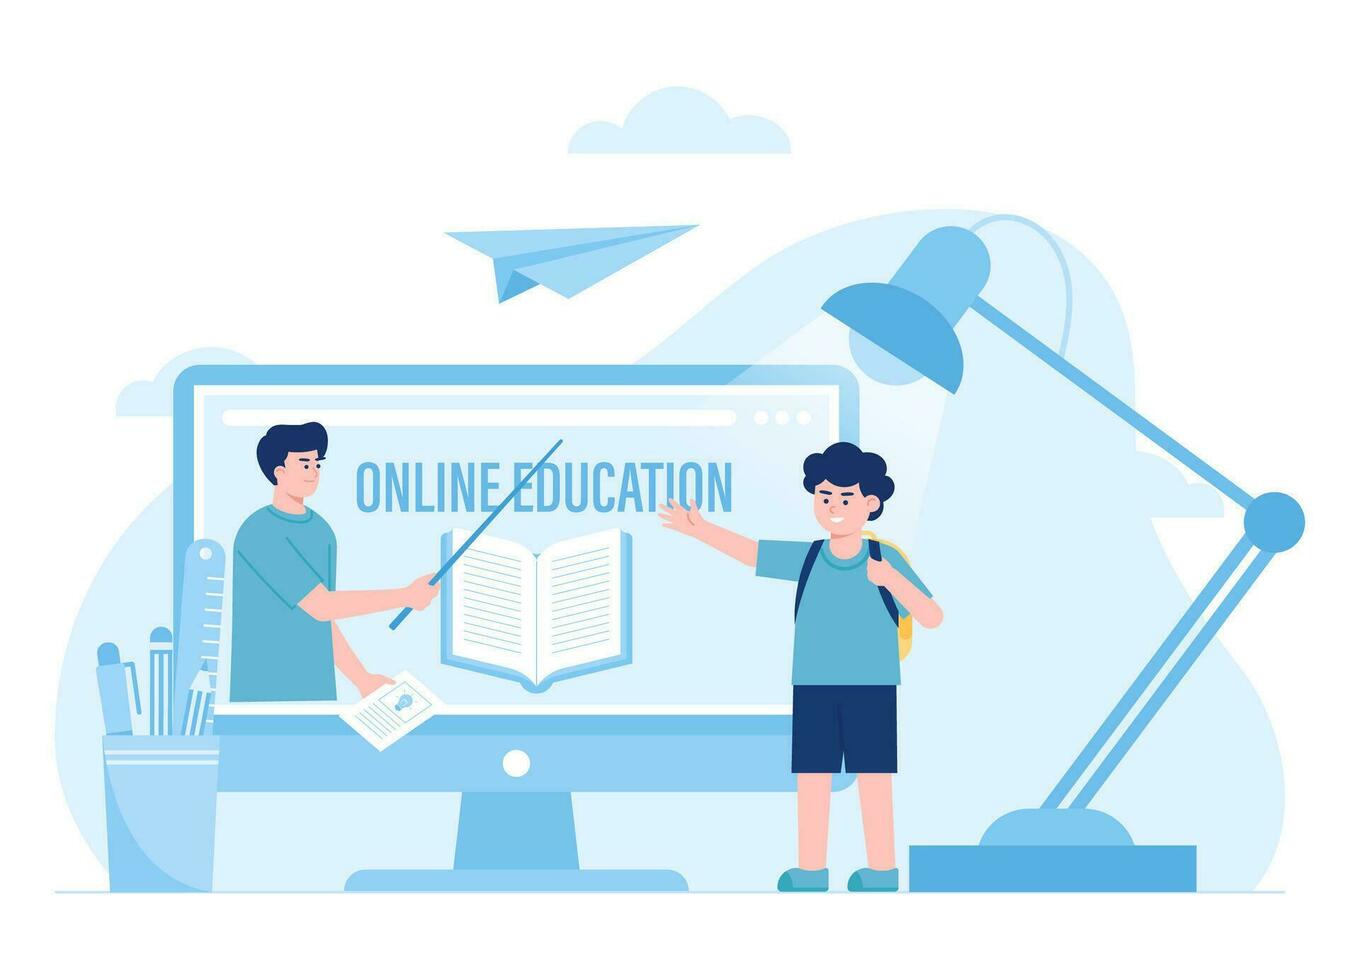 en línea educación para niños vía computadora concepto plano ilustración vector